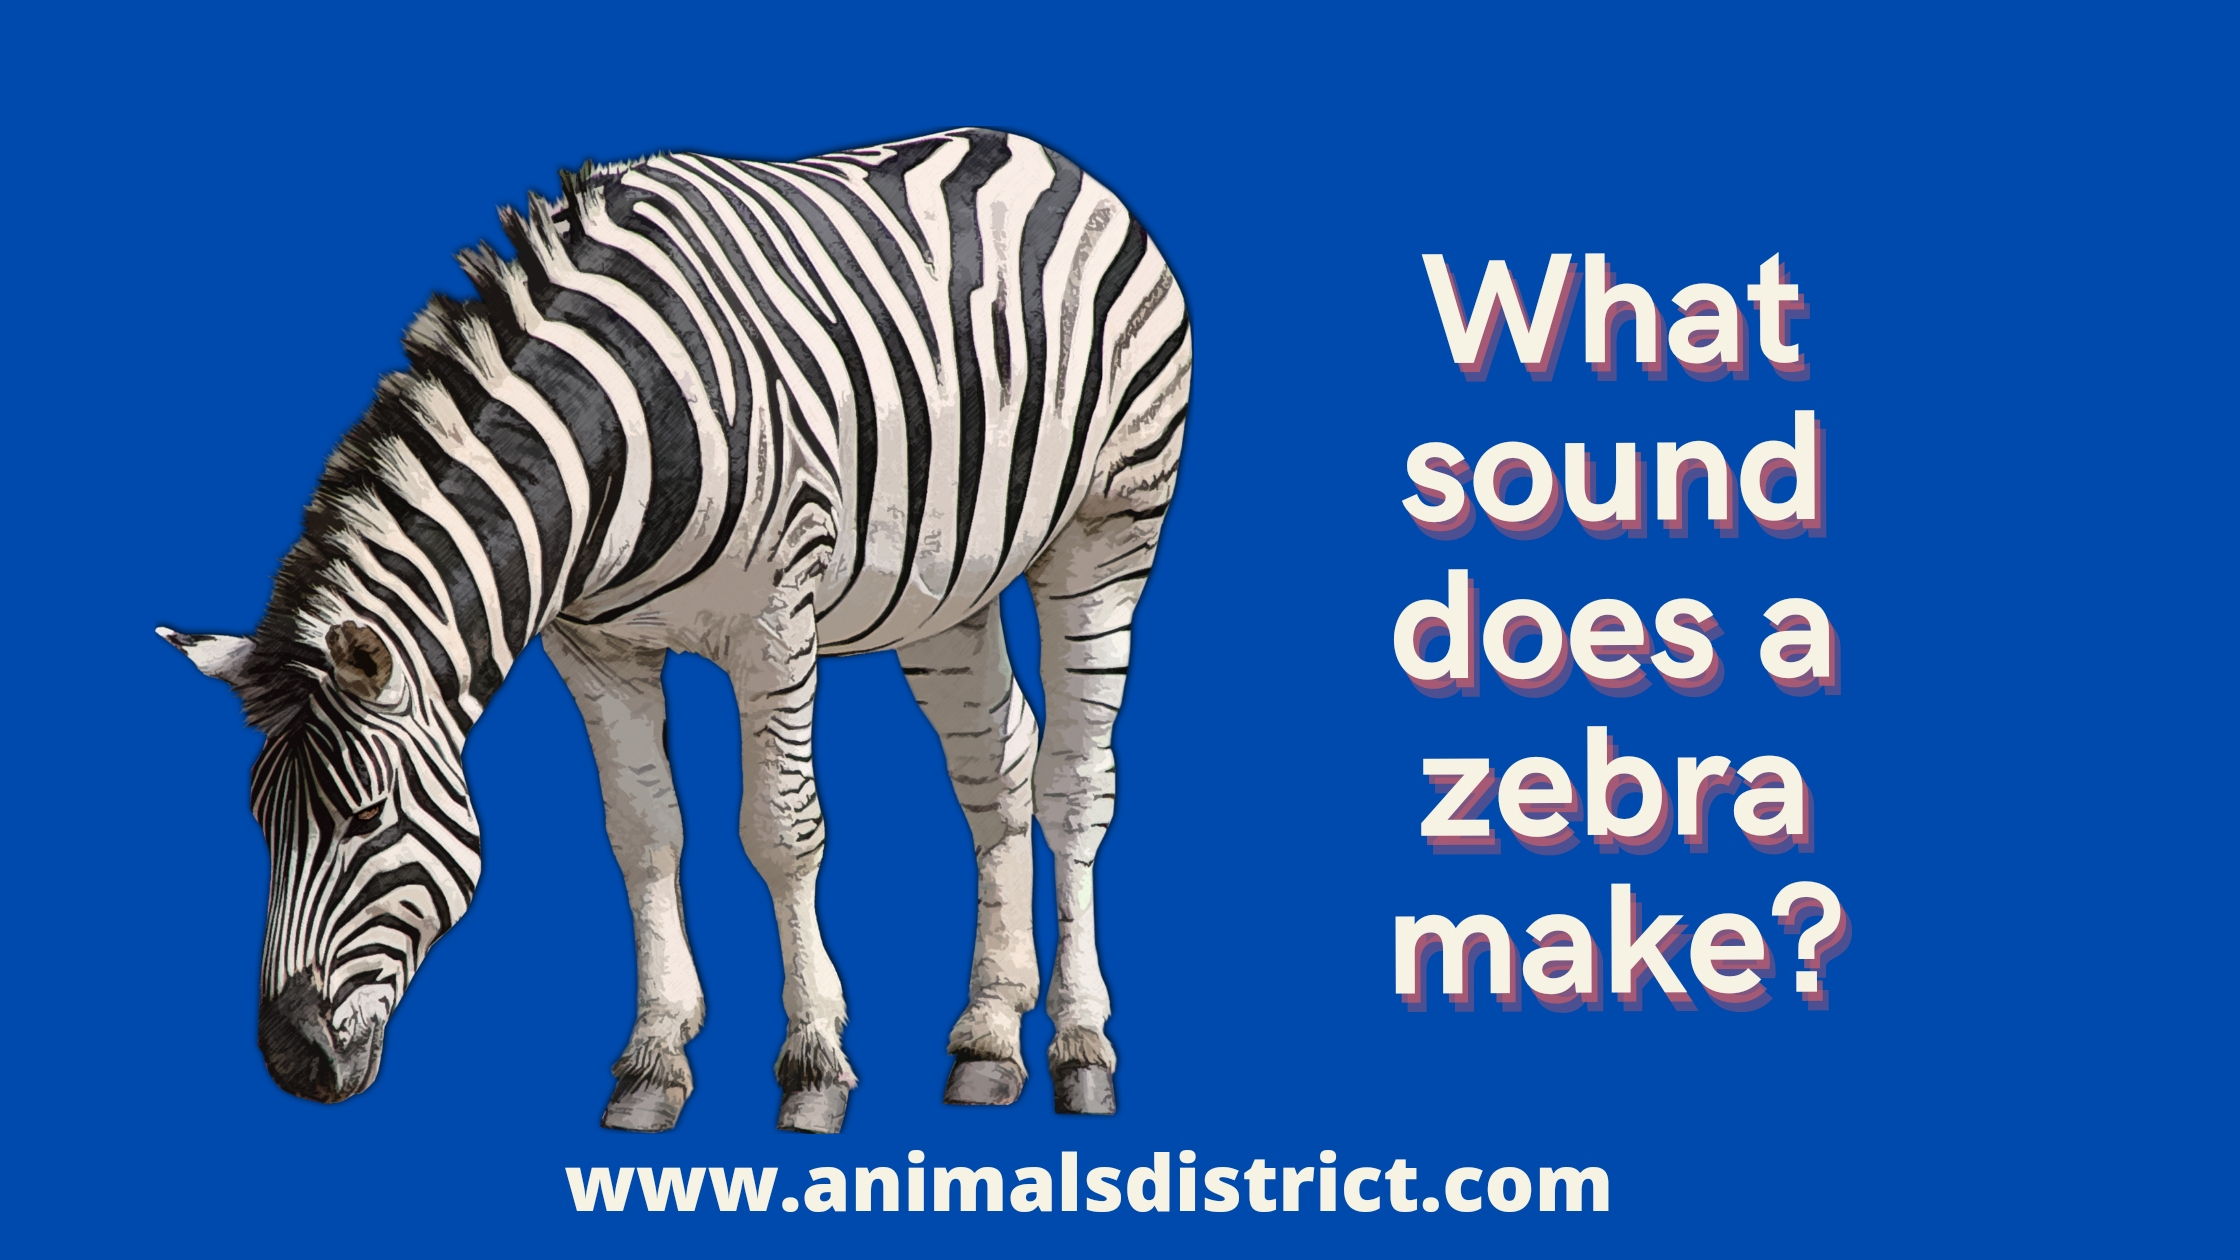 What sound does a zebra make